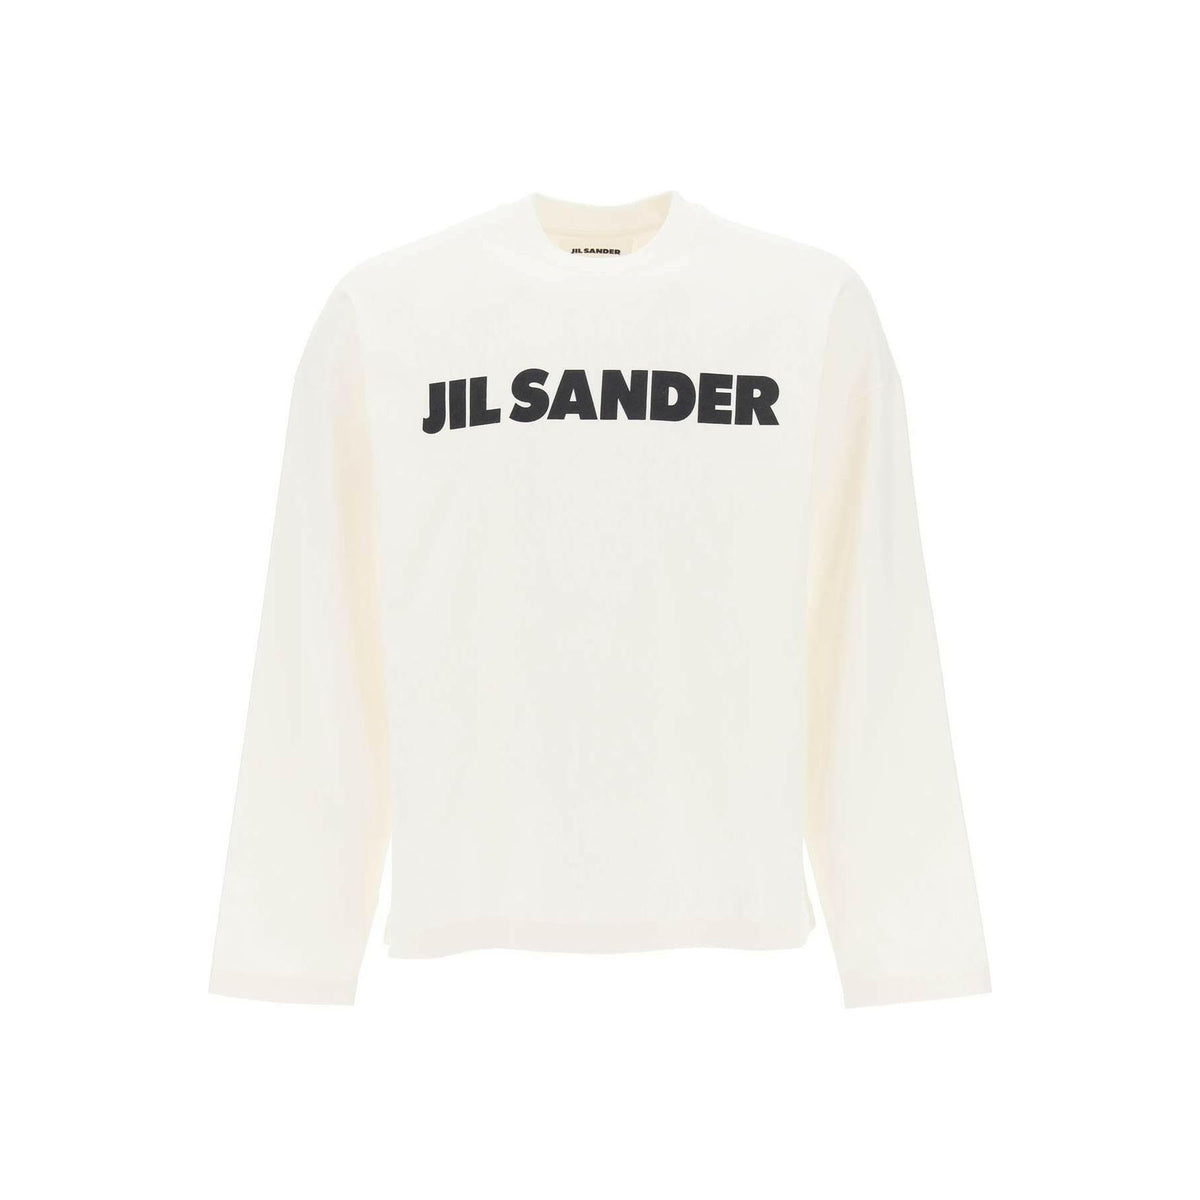 JIL SANDER - Long Sleeved Cotton T-Shirt - JOHN JULIA